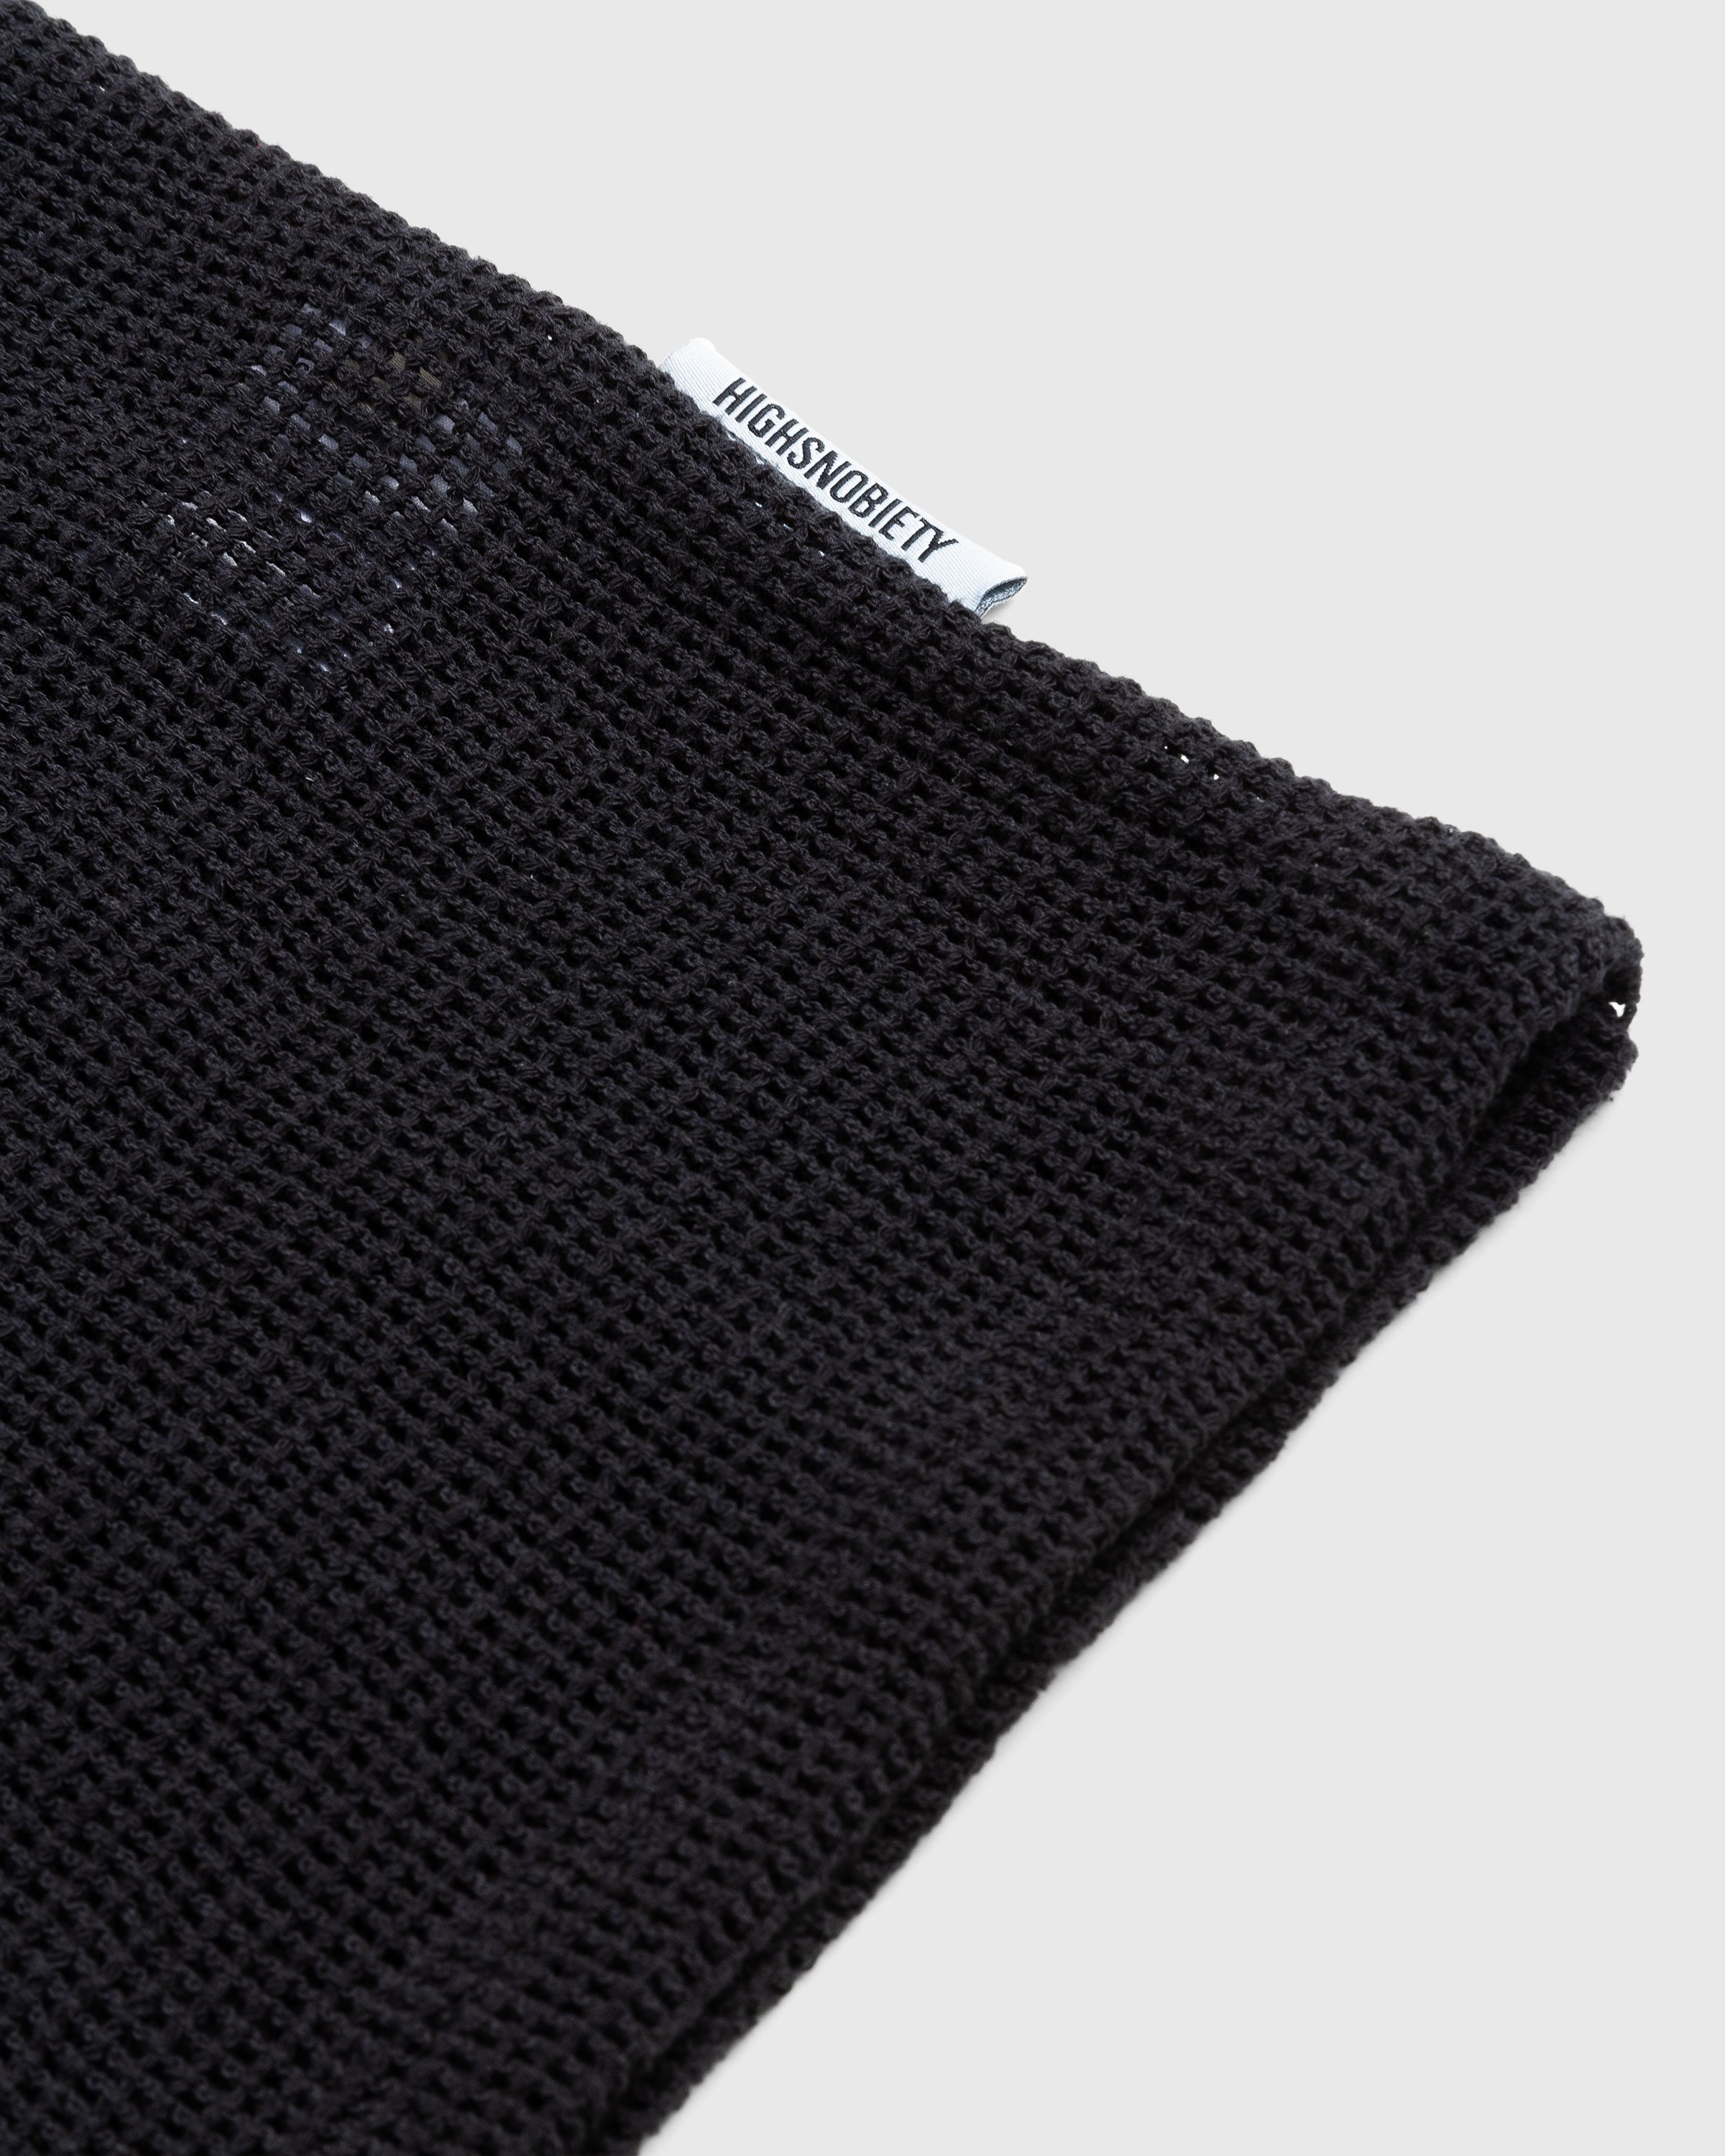 Highsnobiety - Cotton Mesh Knit Tank Top Black - Clothing - Black - Image 7